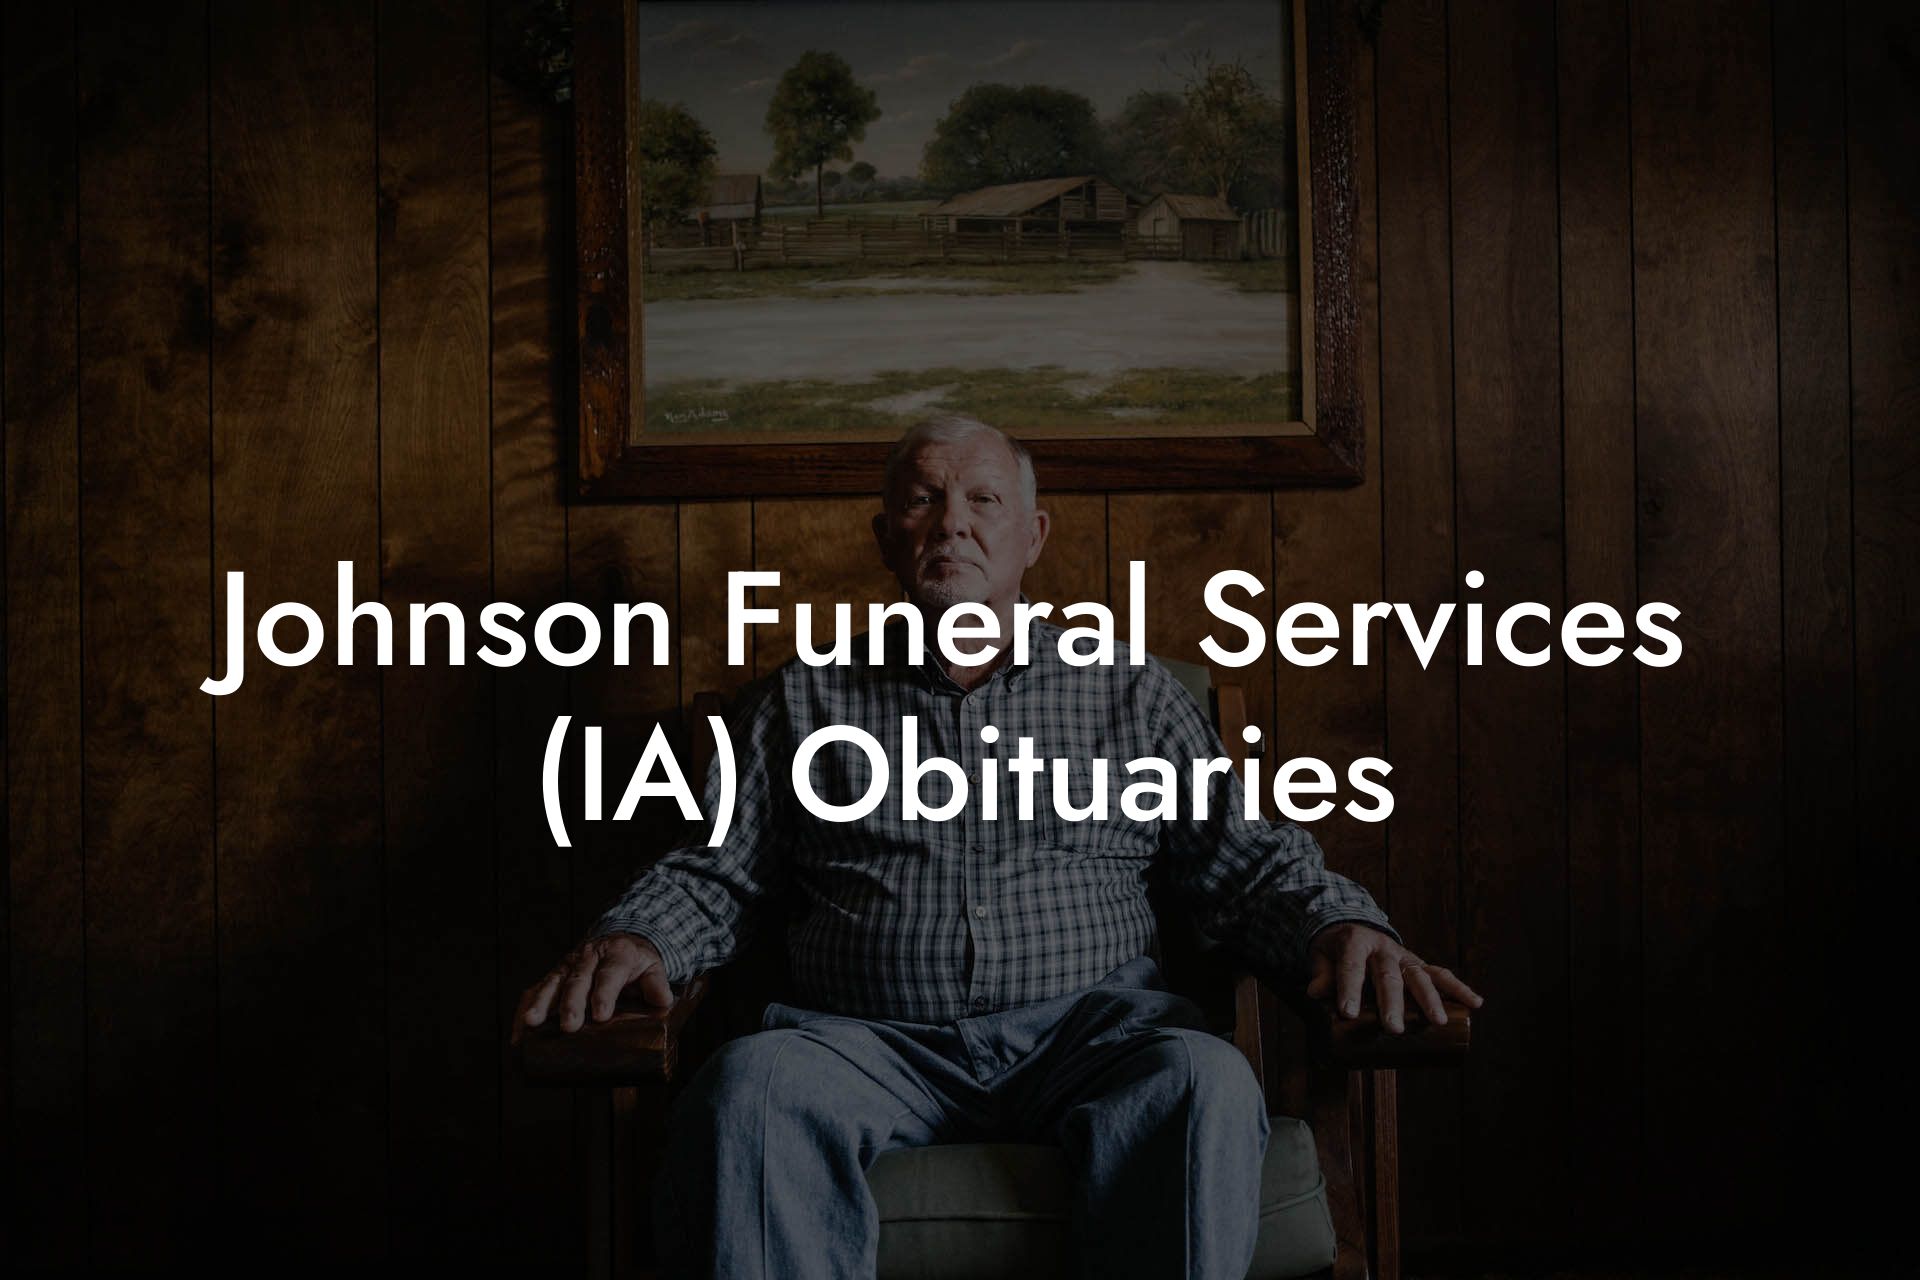 Johnson Funeral Services (IA) Obituaries